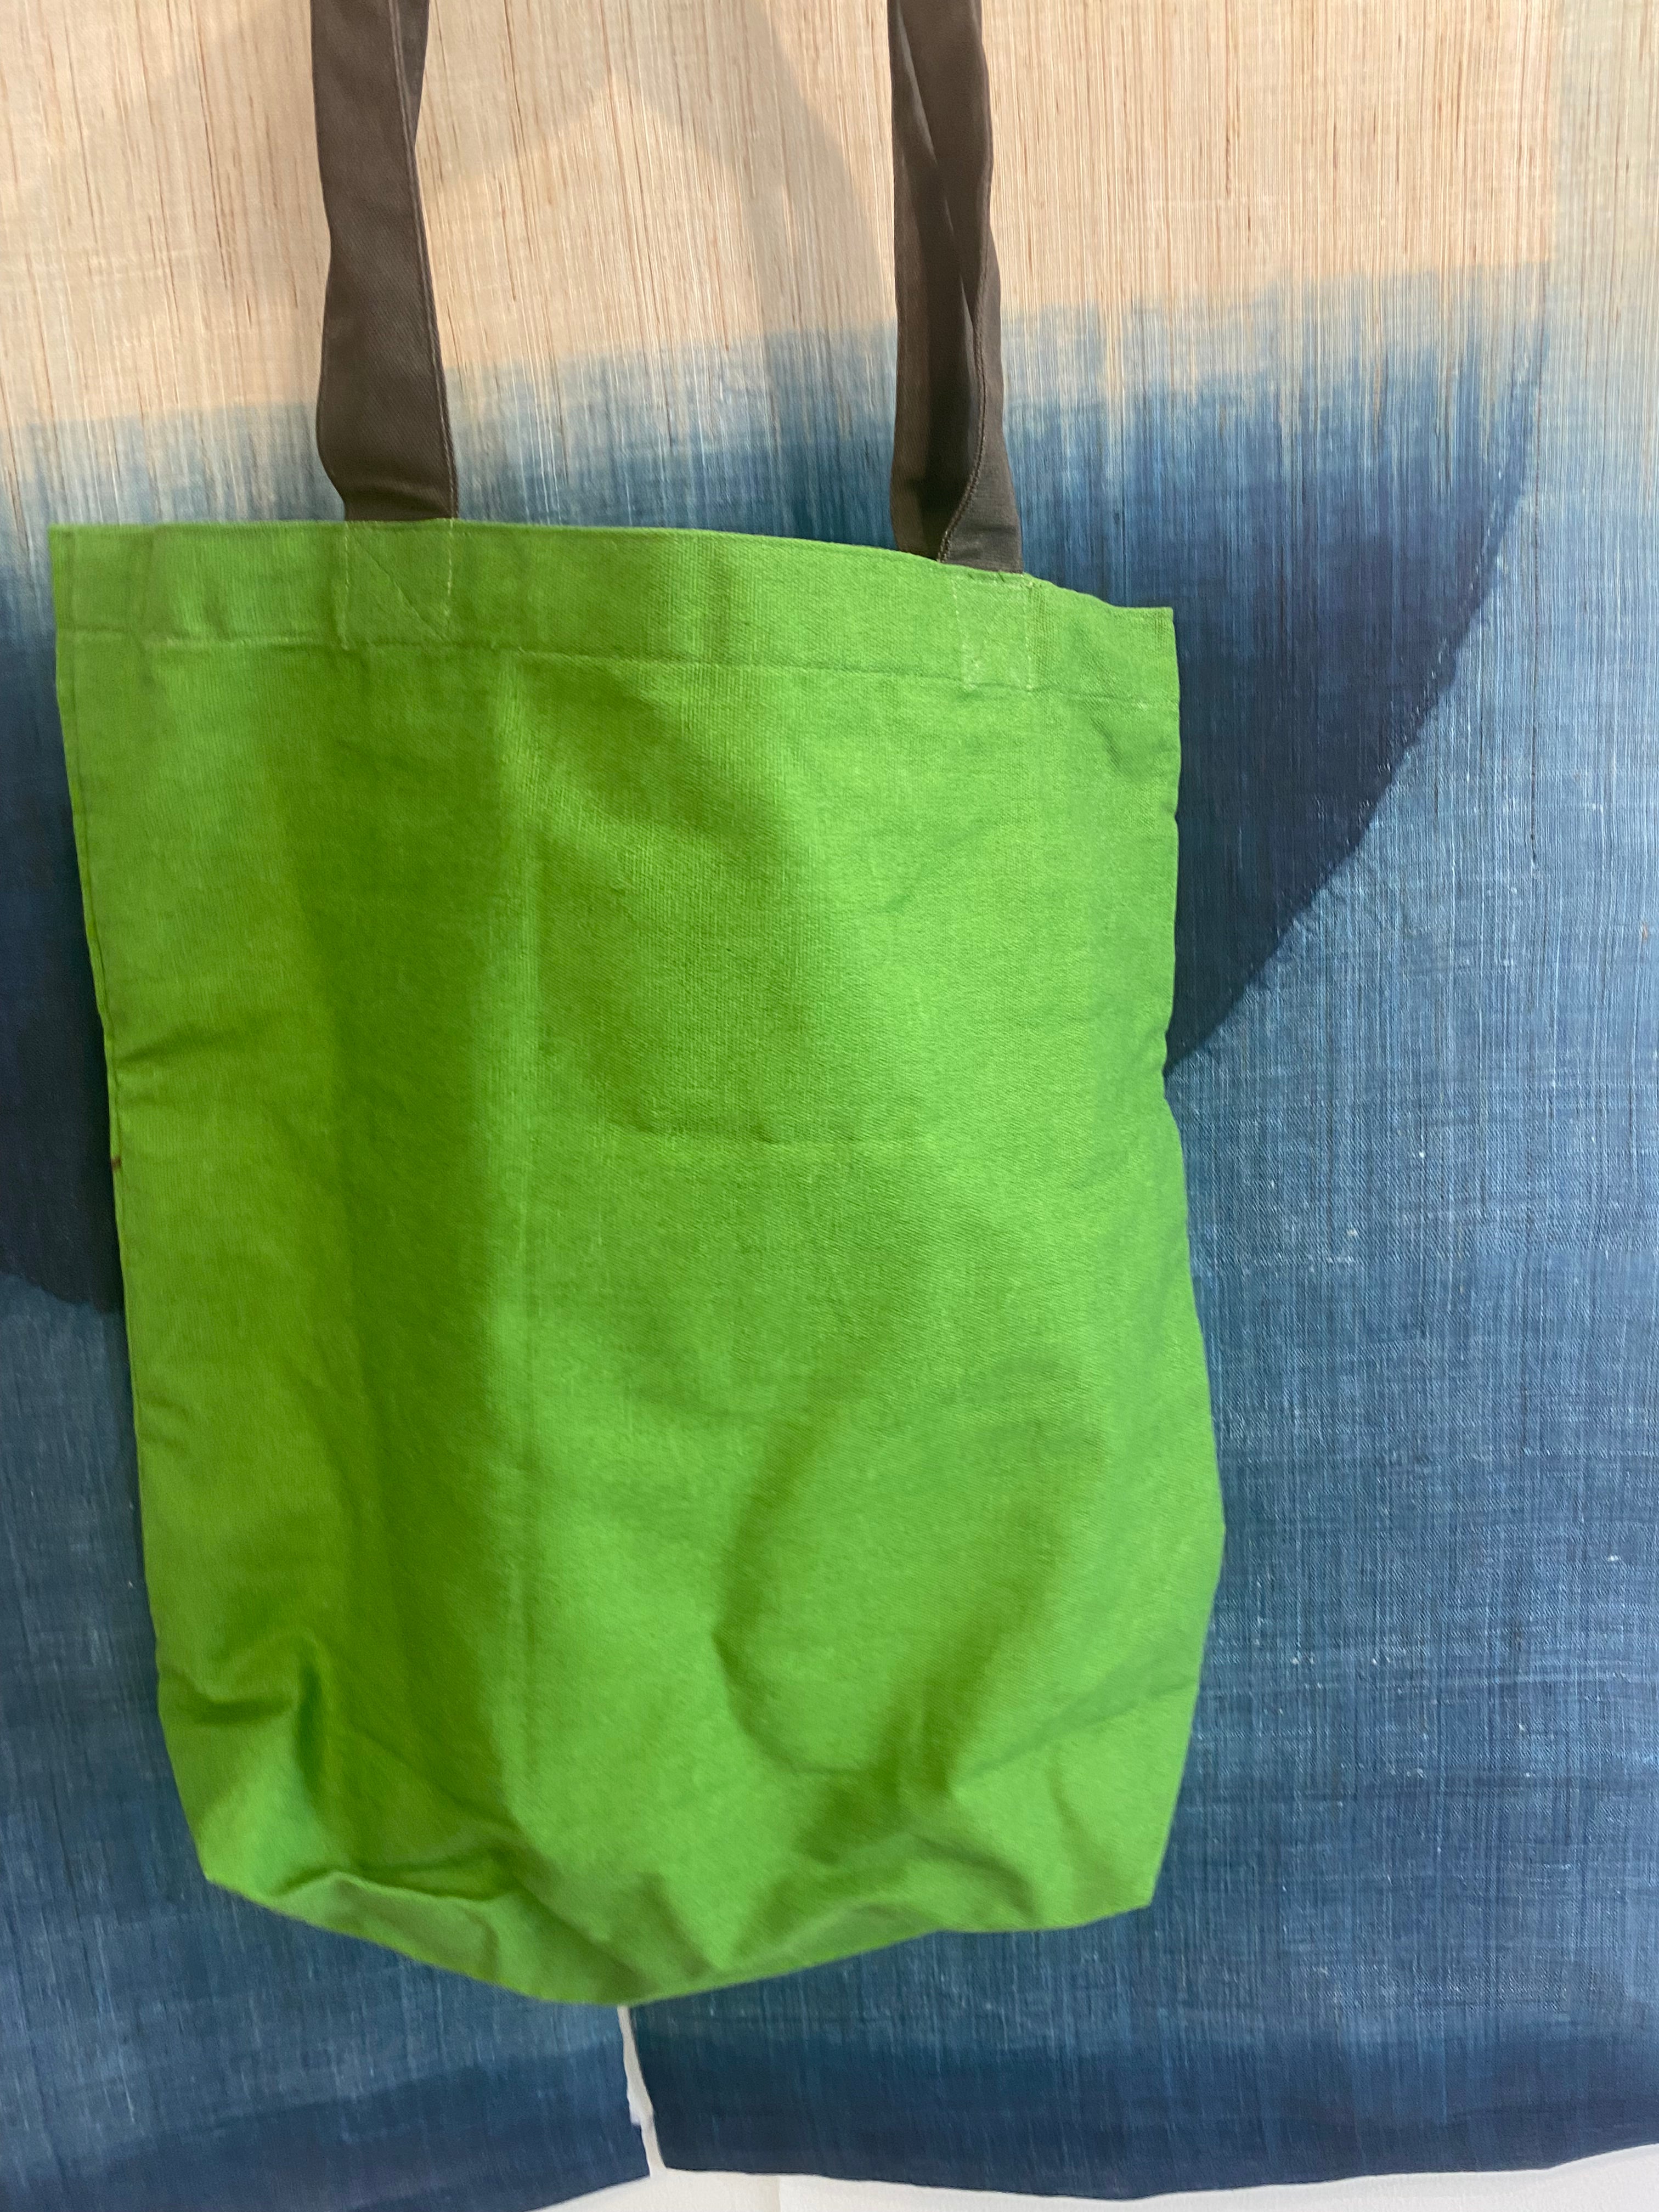 Tote bag green with stubborn shiba